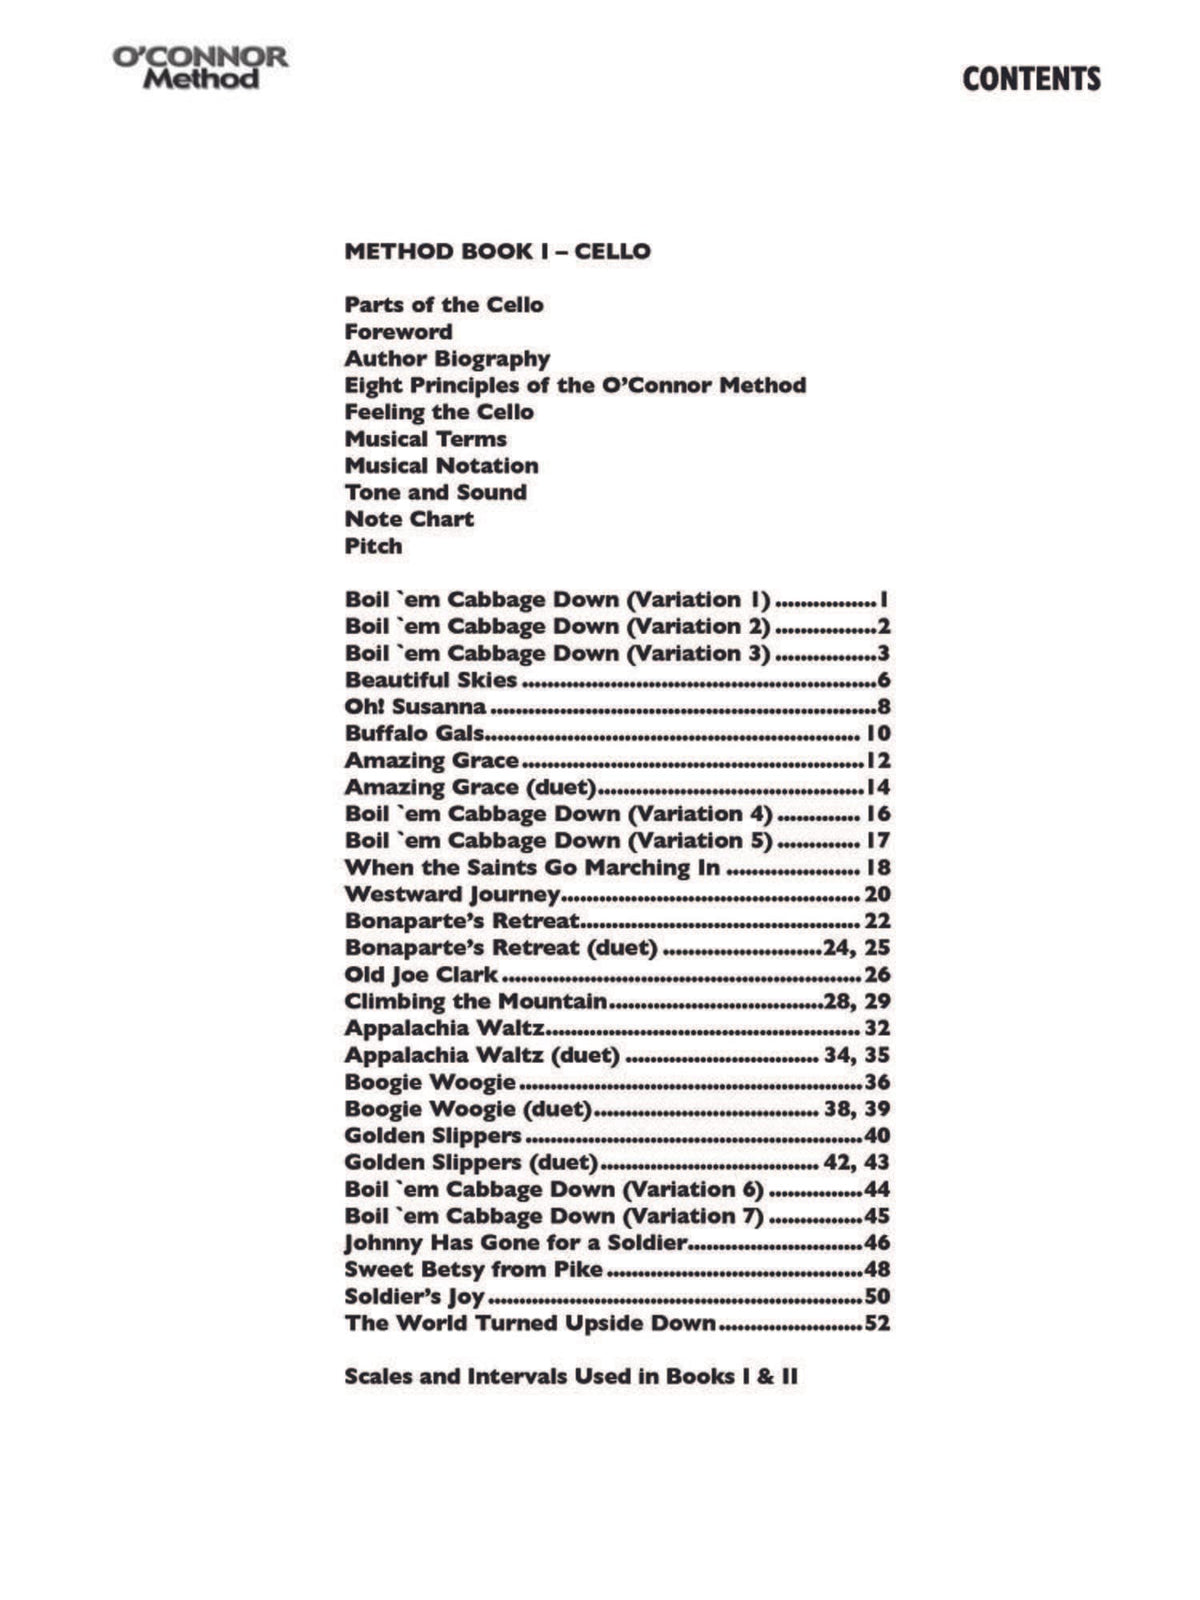 O'Connor Cello Method Book I - Digital Download